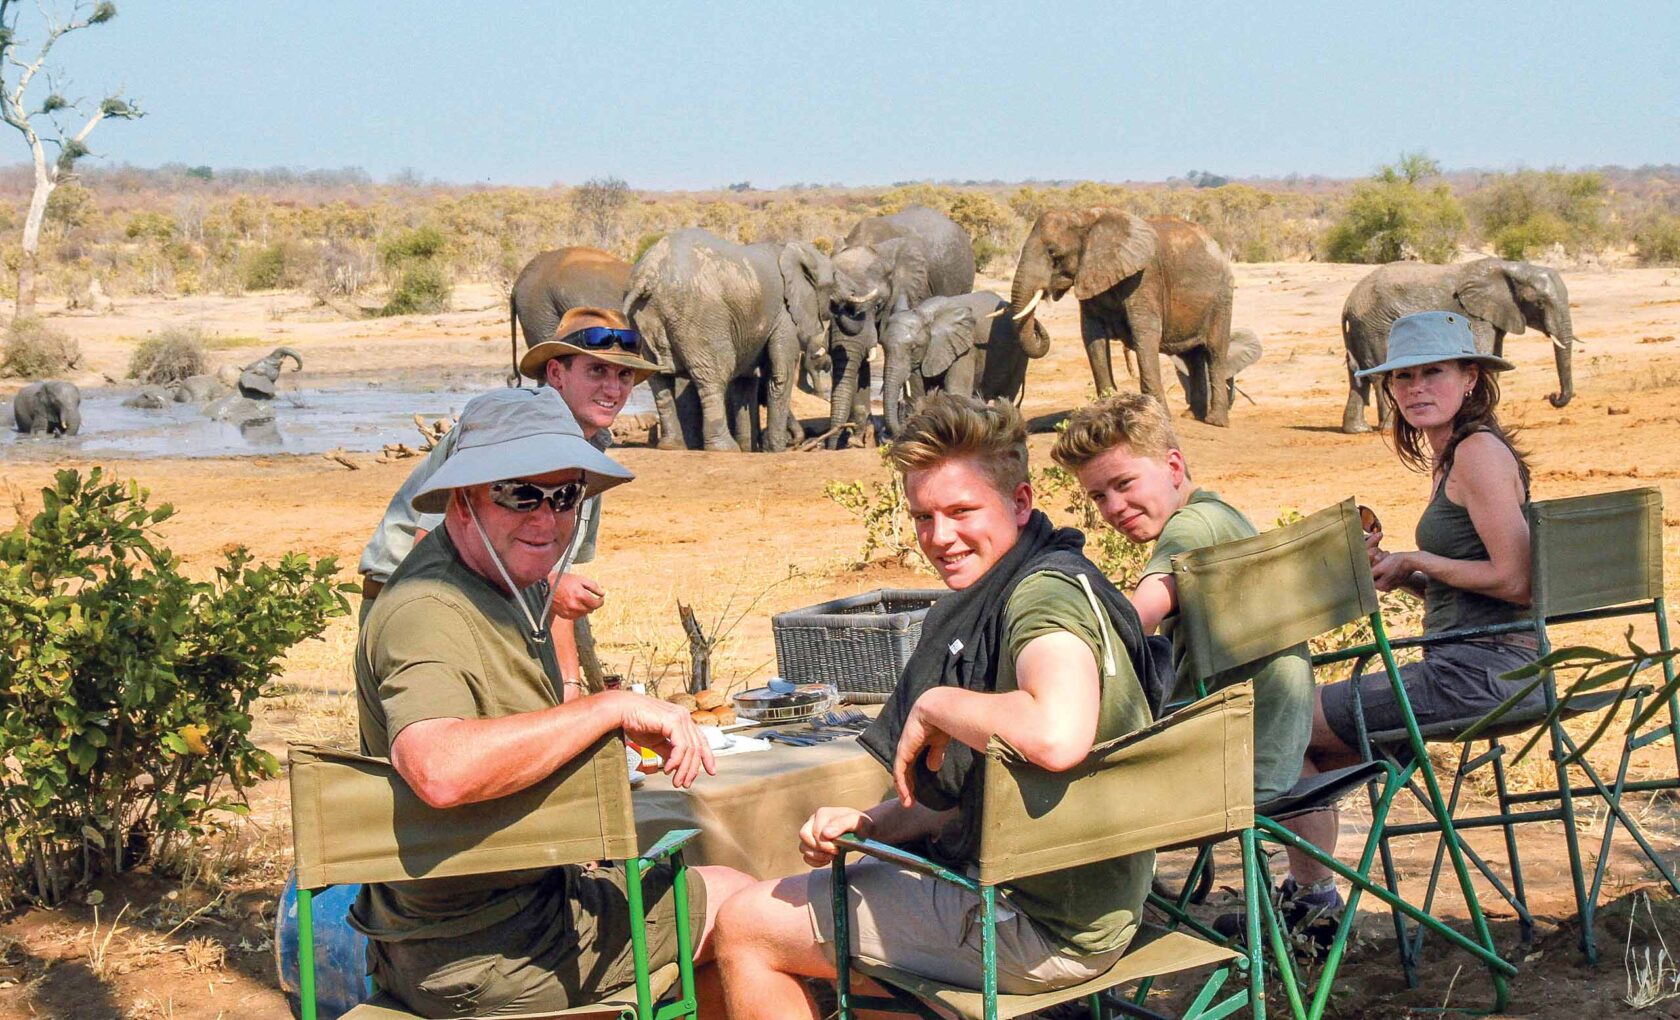 Group of travelers on safari in Zimbabwe having snacks near herd of elephants.